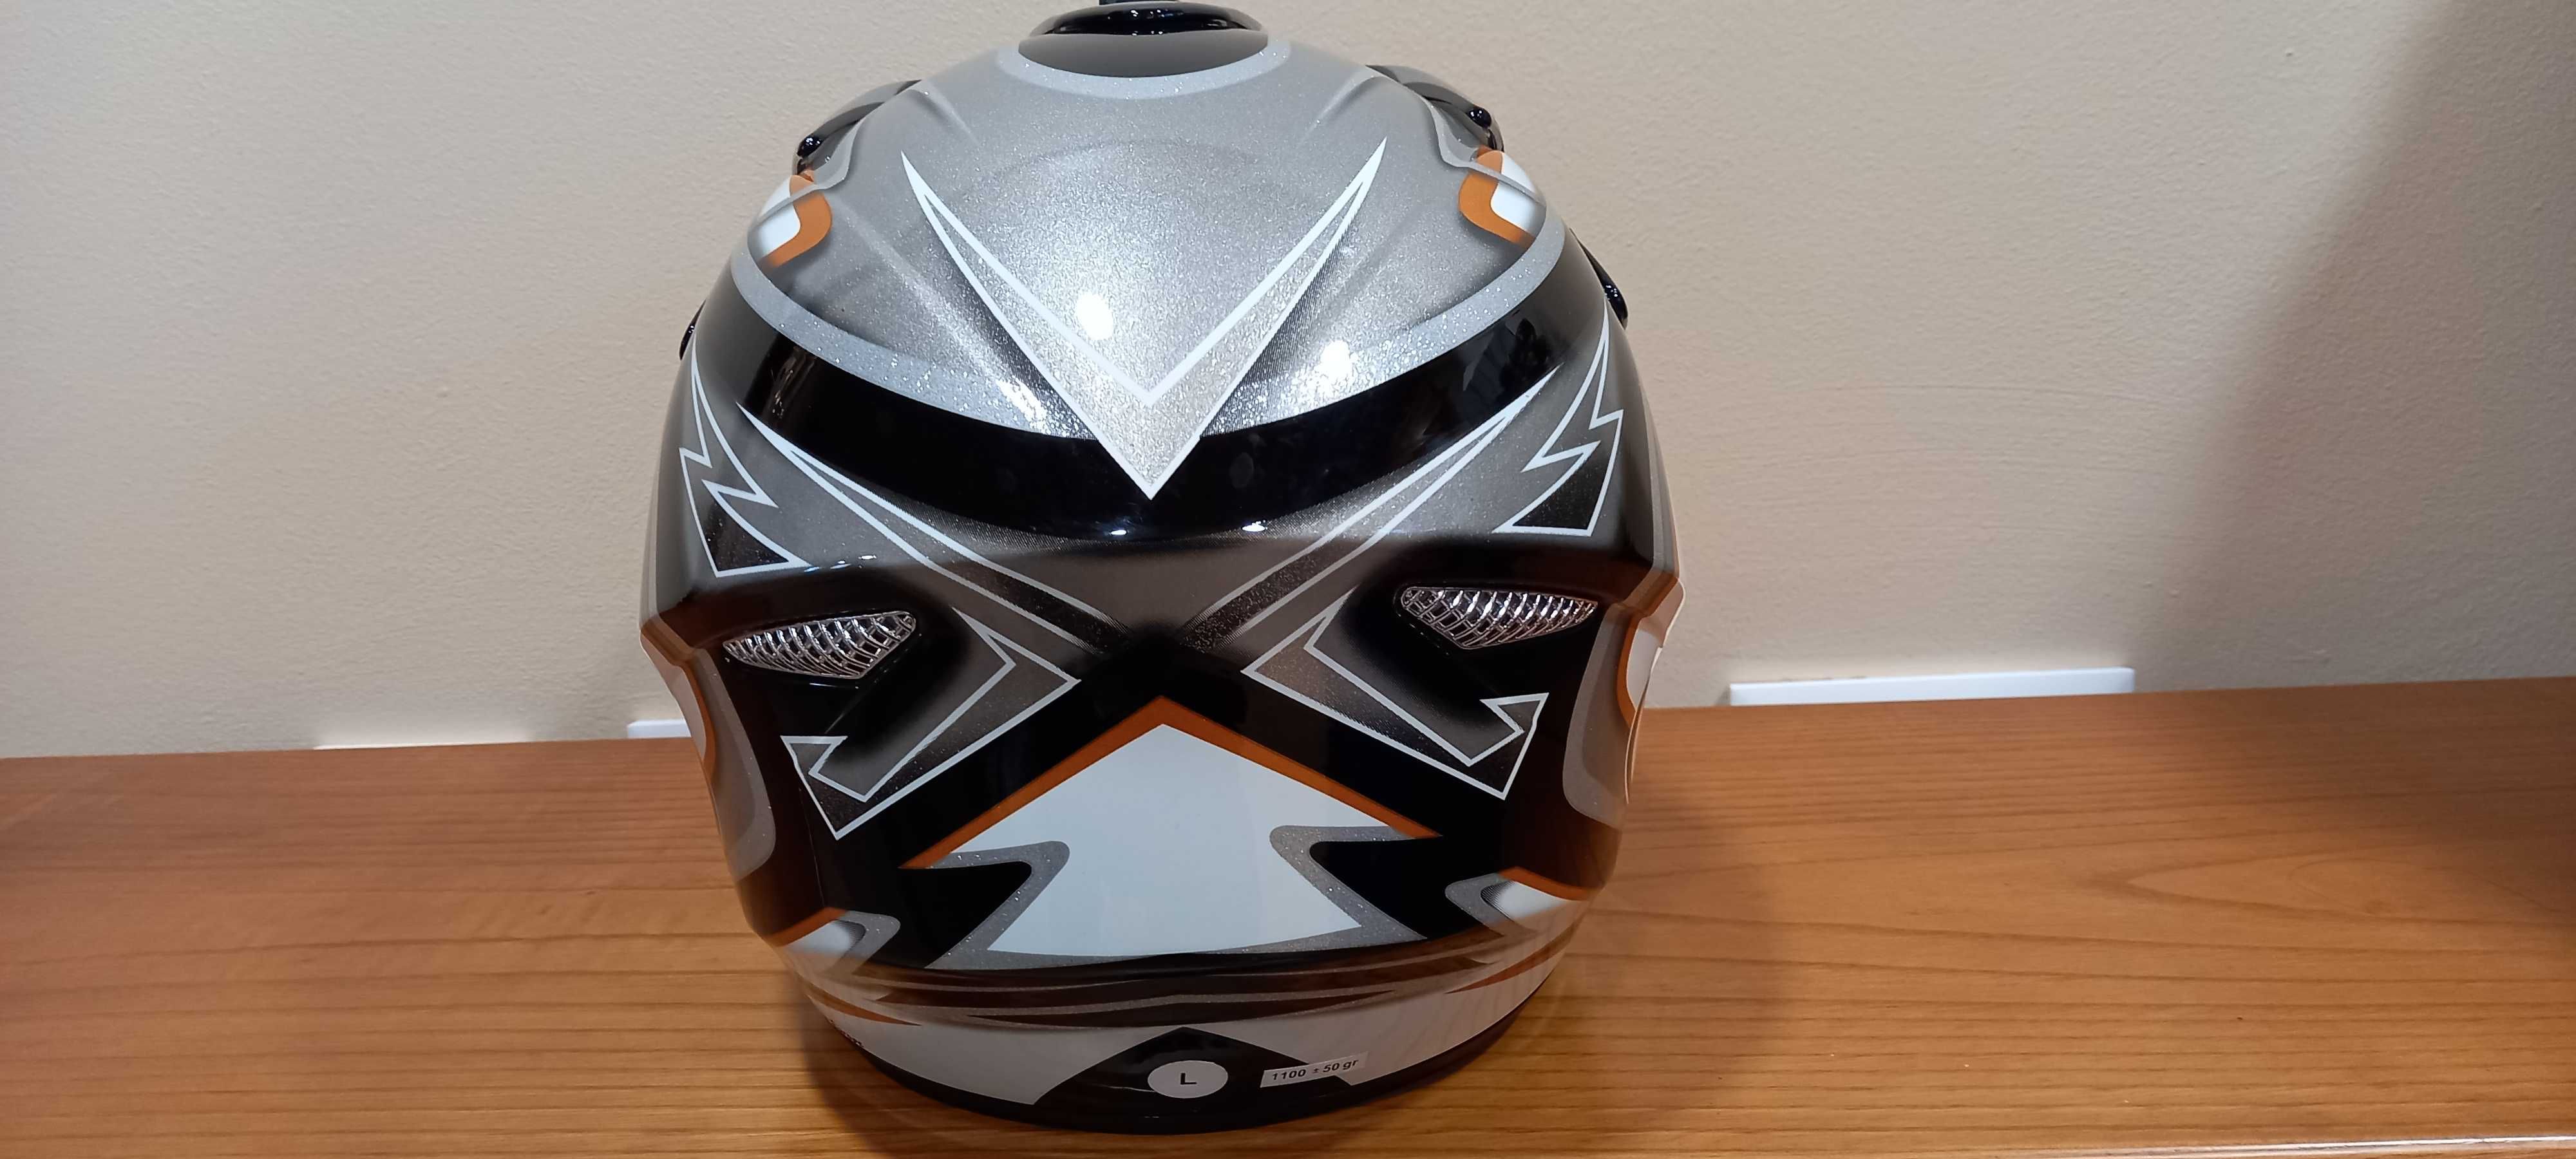 Capacete CMS Helmets Junior Novo